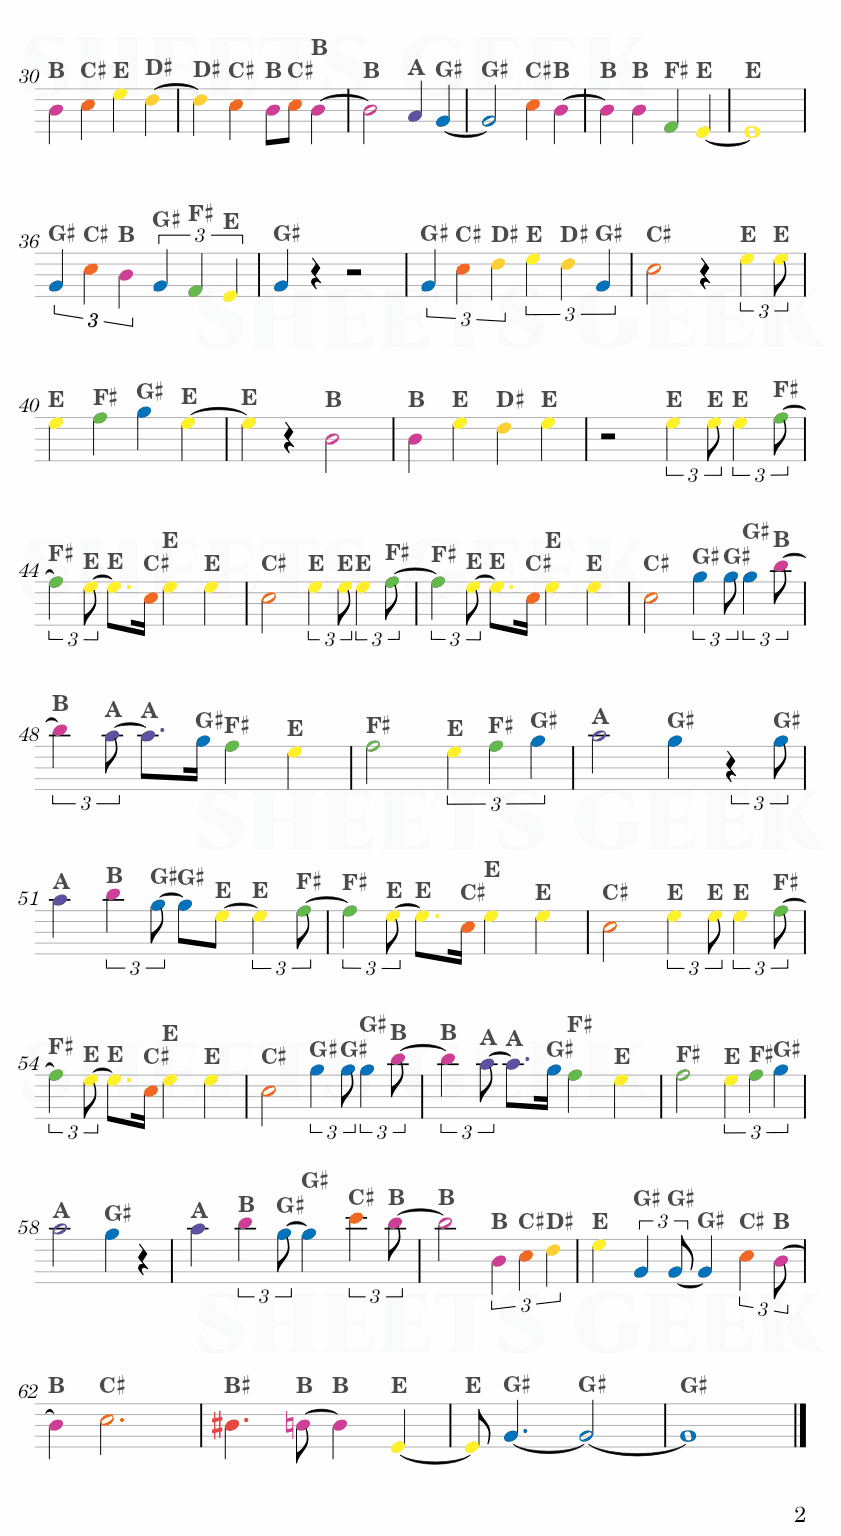 Kigeki - Gen Hoshino (Spy x Family Ending 1) Easy Sheet Music Free for piano, keyboard, flute, violin, sax, cello page 2